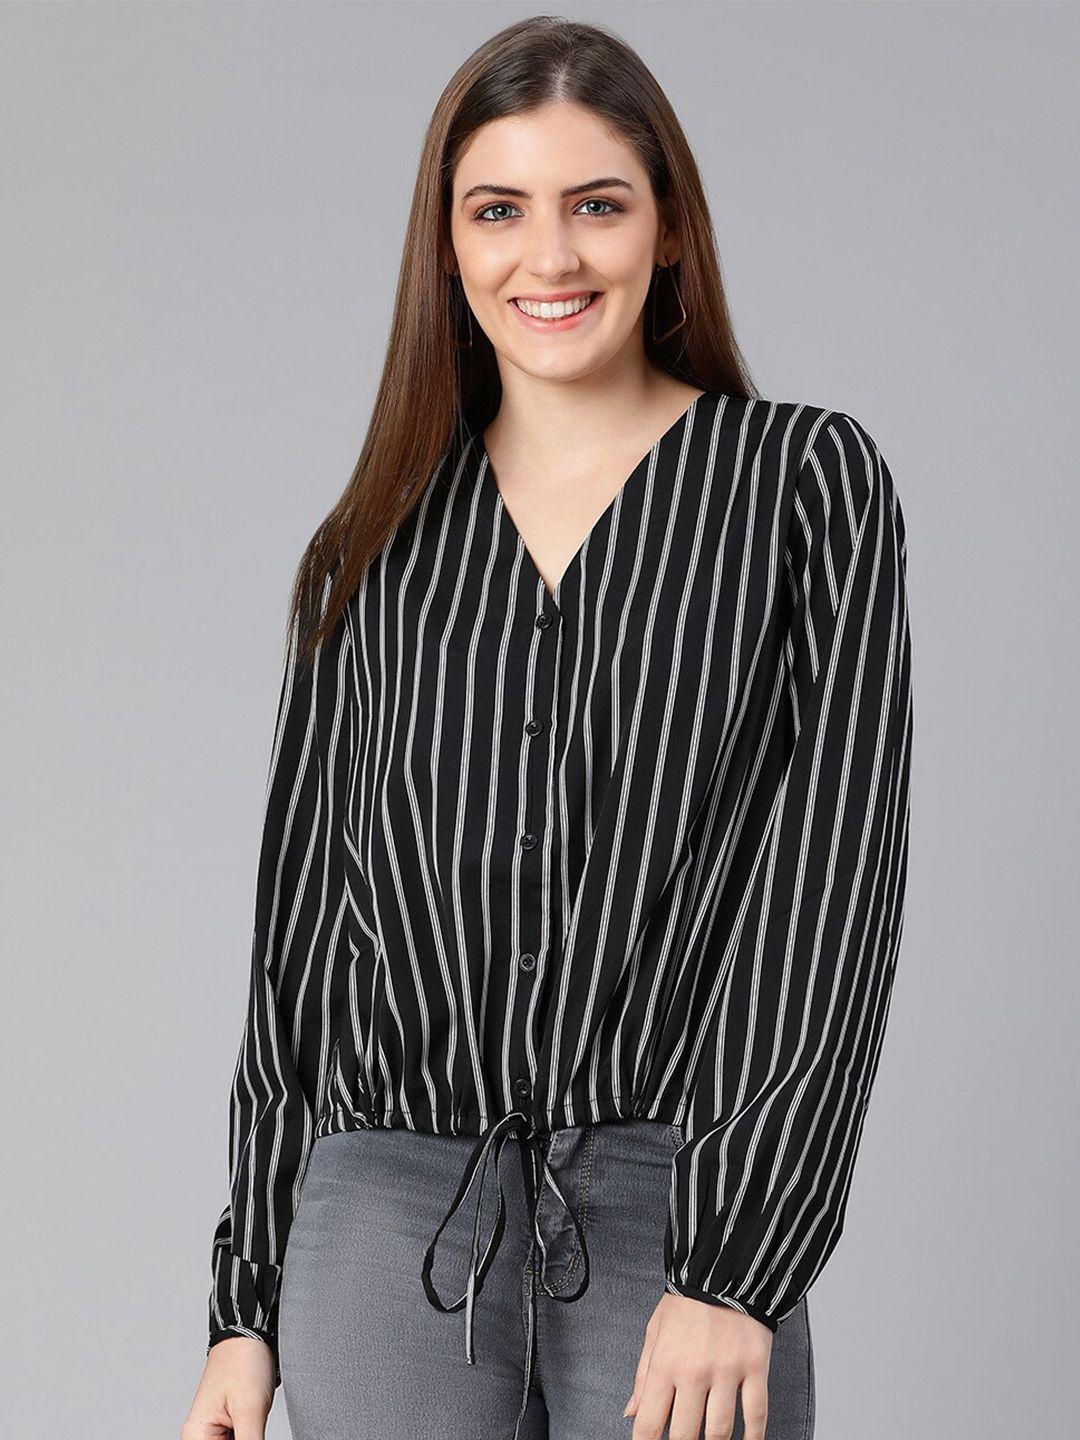 oxolloxo black & white striped shirt style top